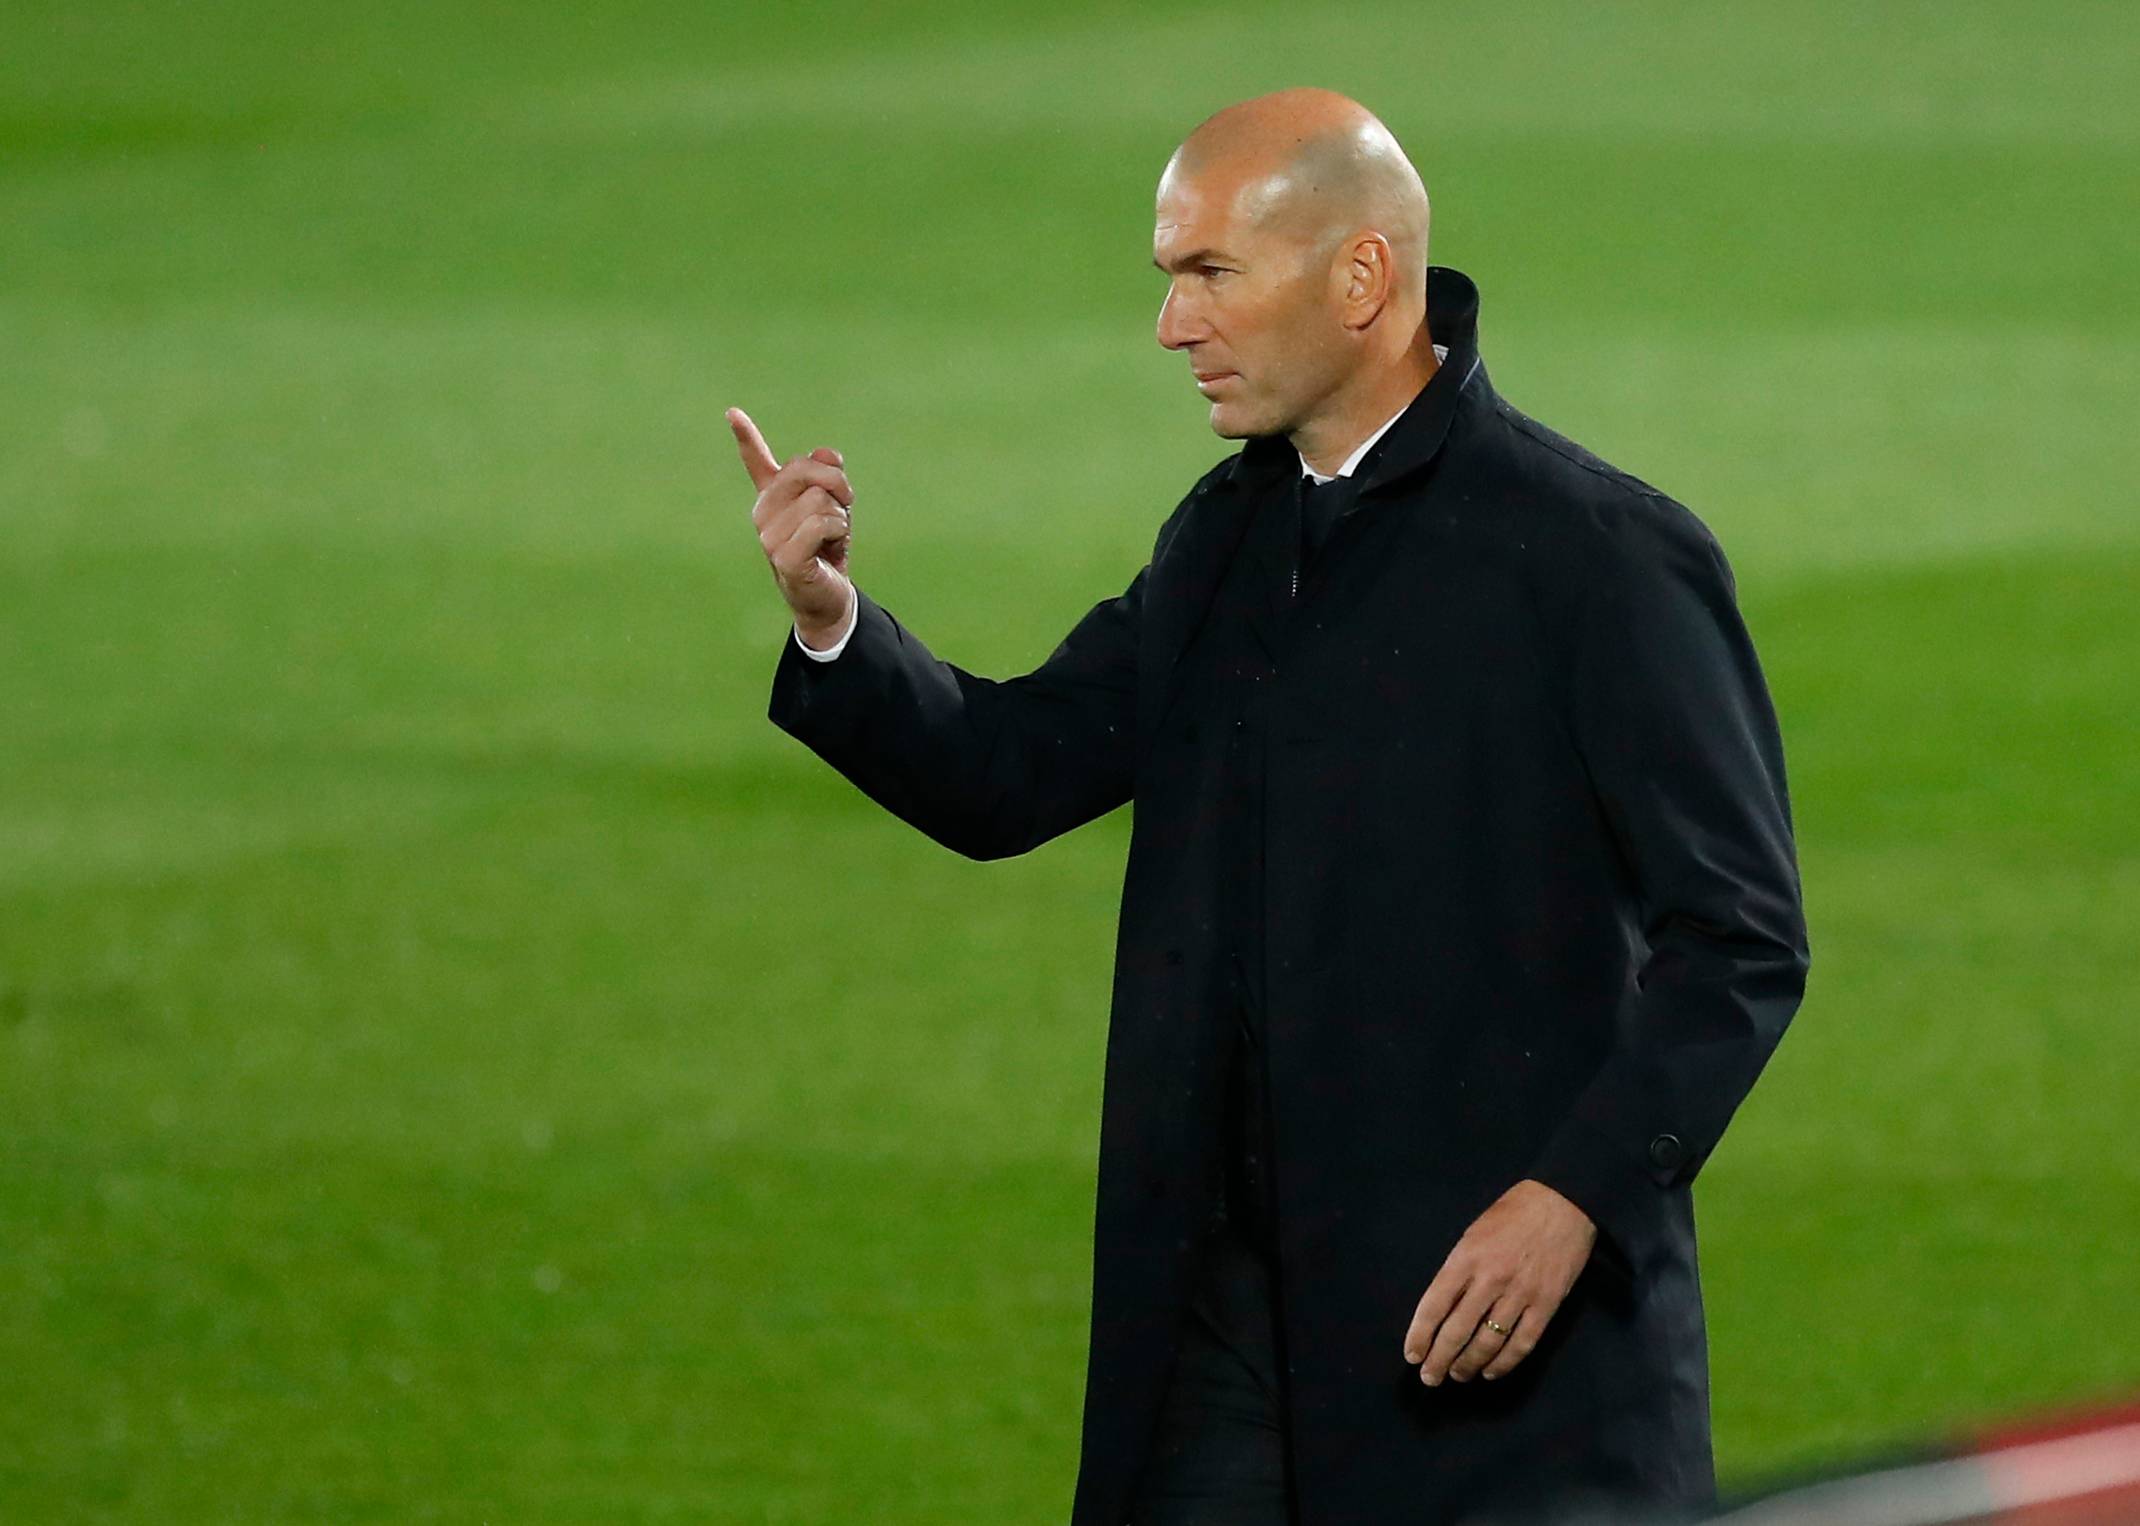 Zinedine Zidane managing for Real Madrid